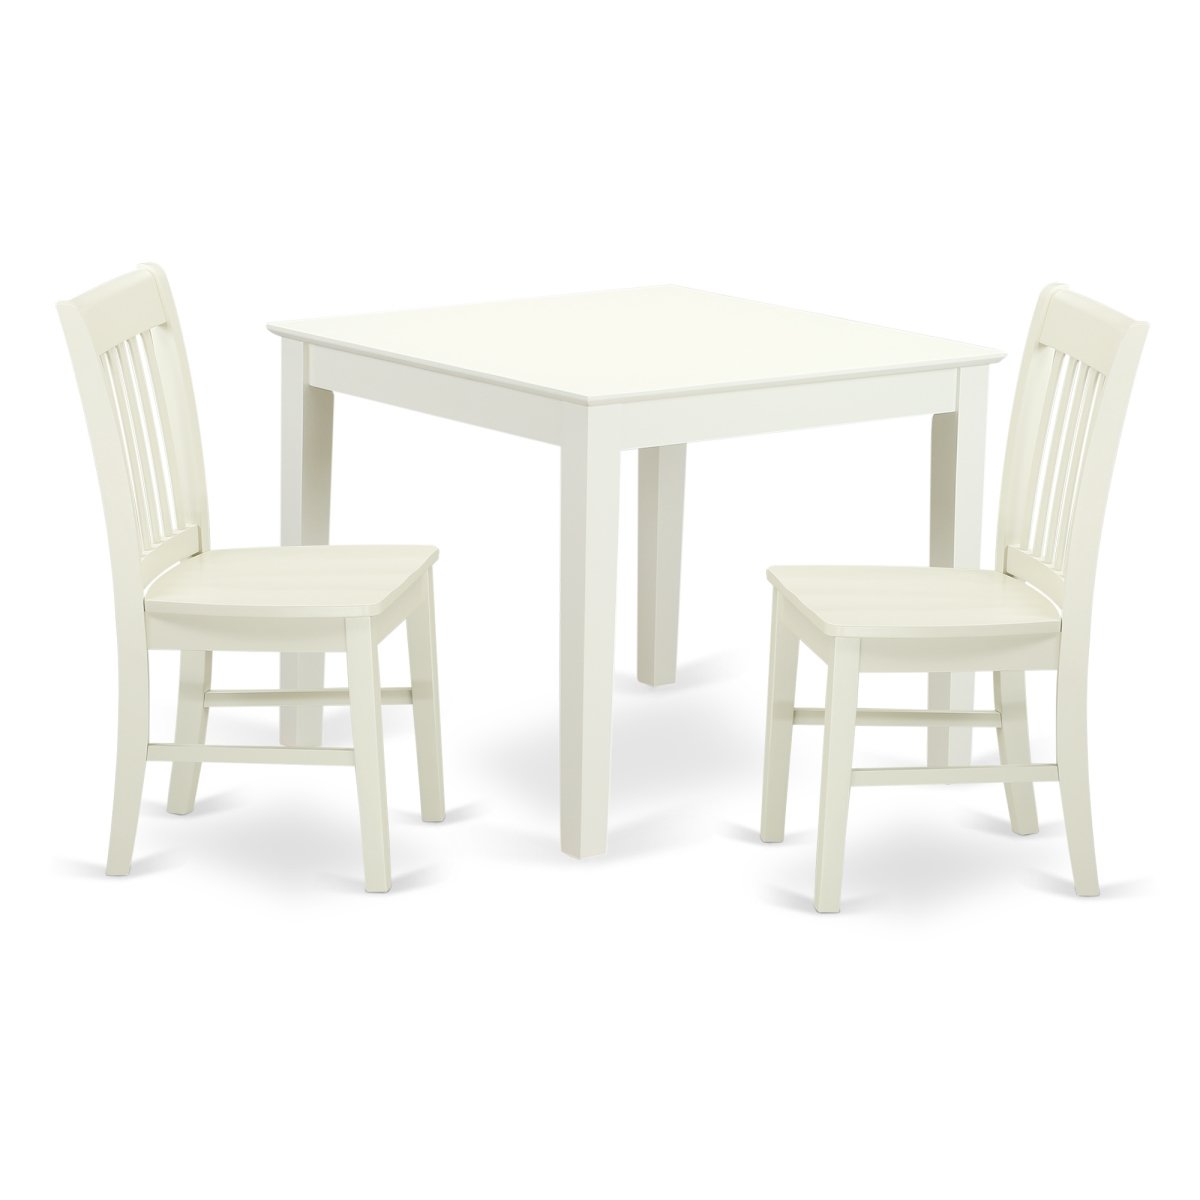 Oxno3-lwh-w 3 Piece Dinette Table Set, Linen White